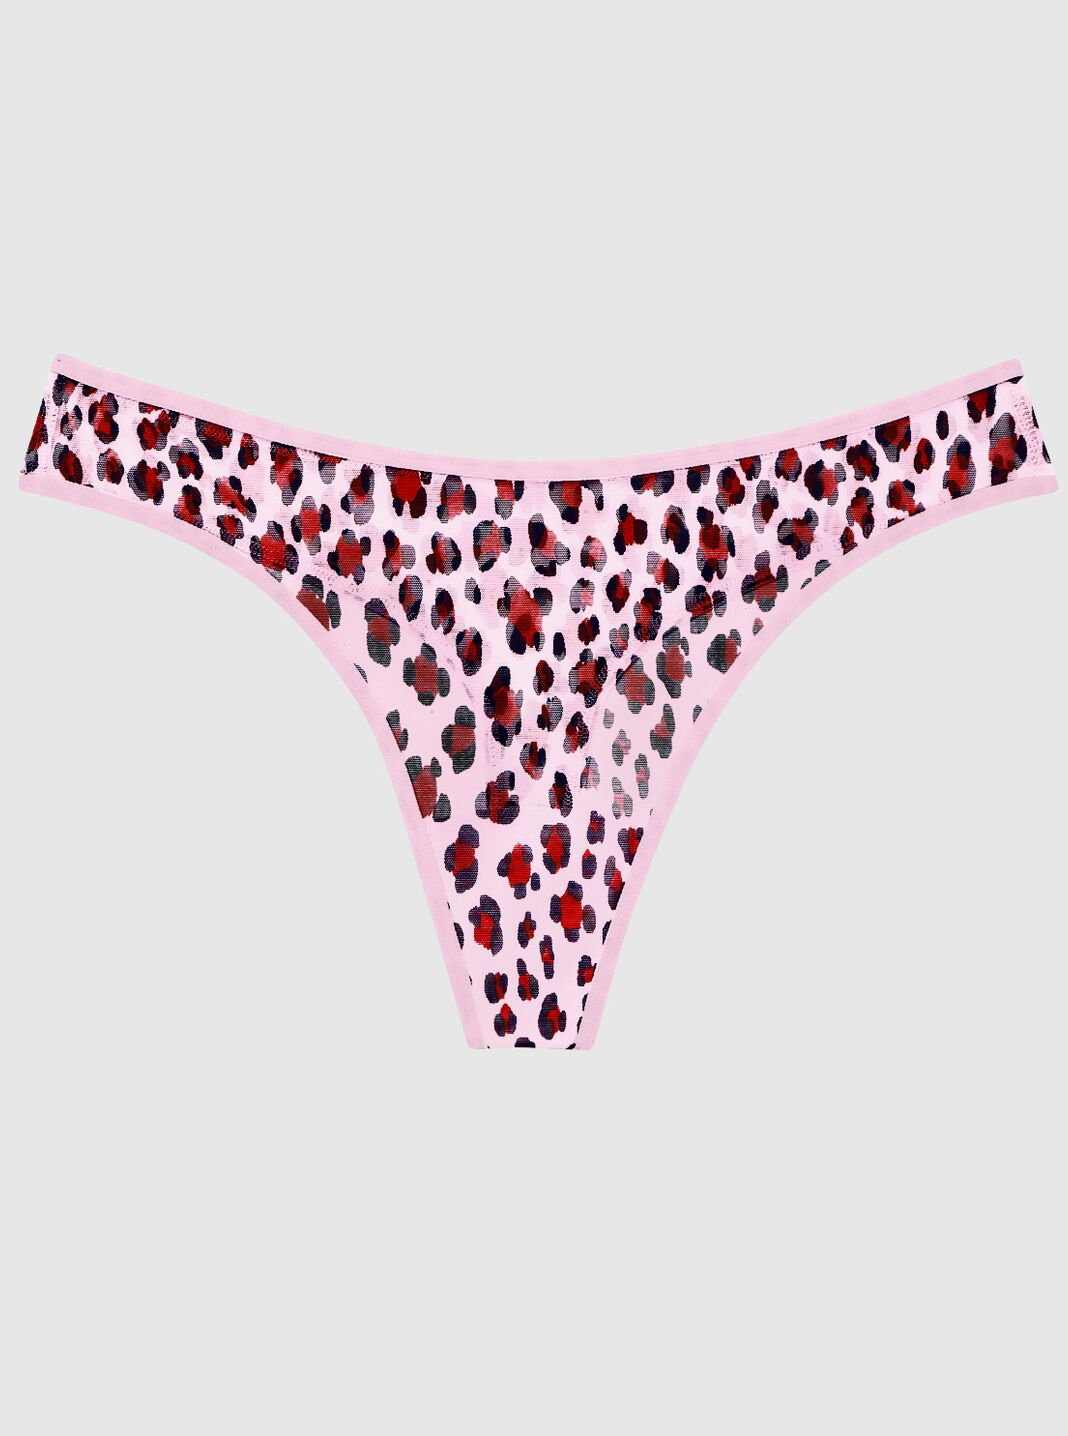 Victoria's Secret VS PINK Assorted Size S Panties - Lot of 5